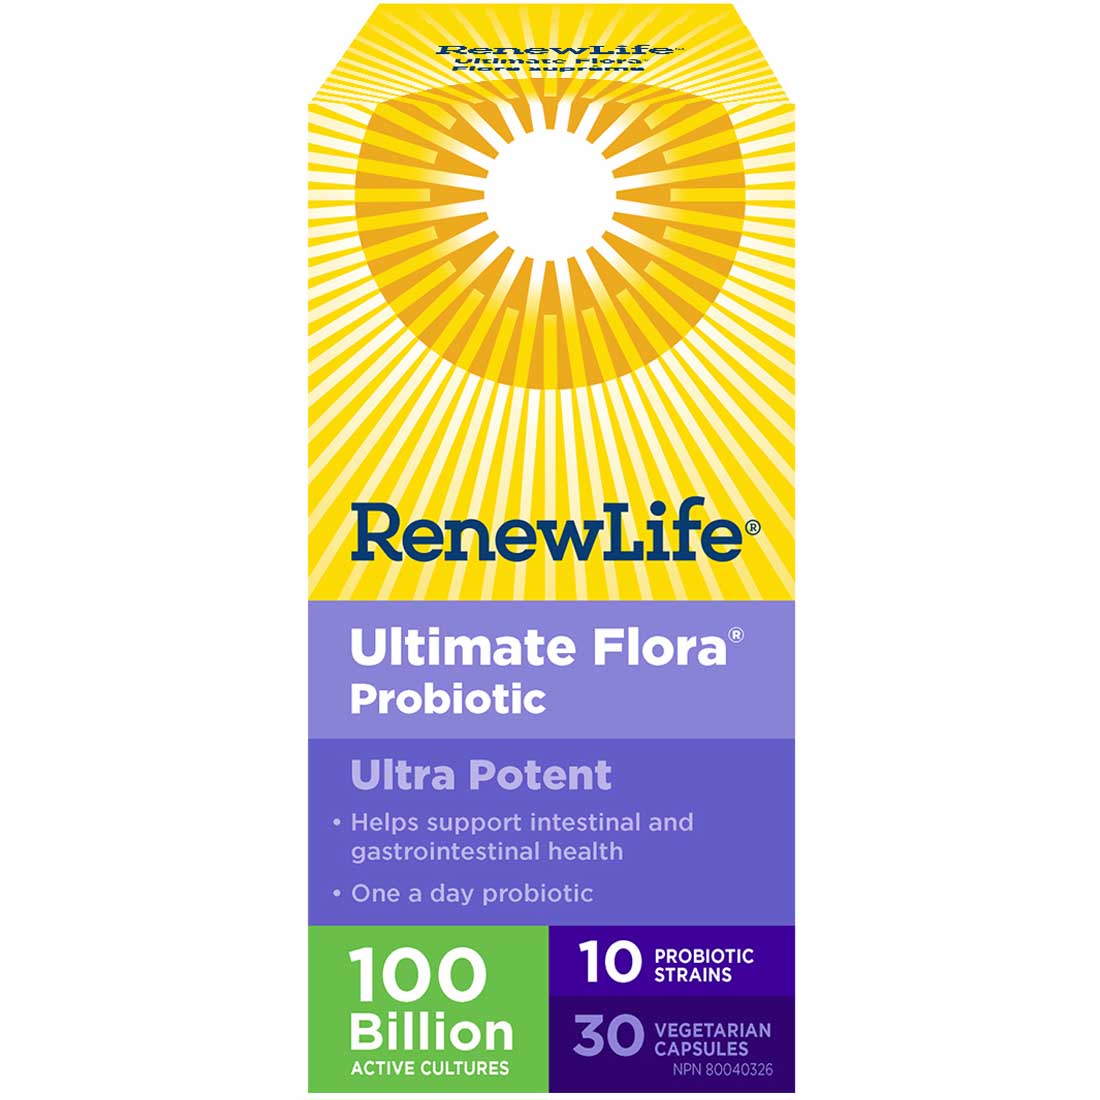 Renew Life Ultimate Flora Ultimate Care Probiotic 100 Billion Active Cultures (Formerly Ultimate Flora Ultra Potent)